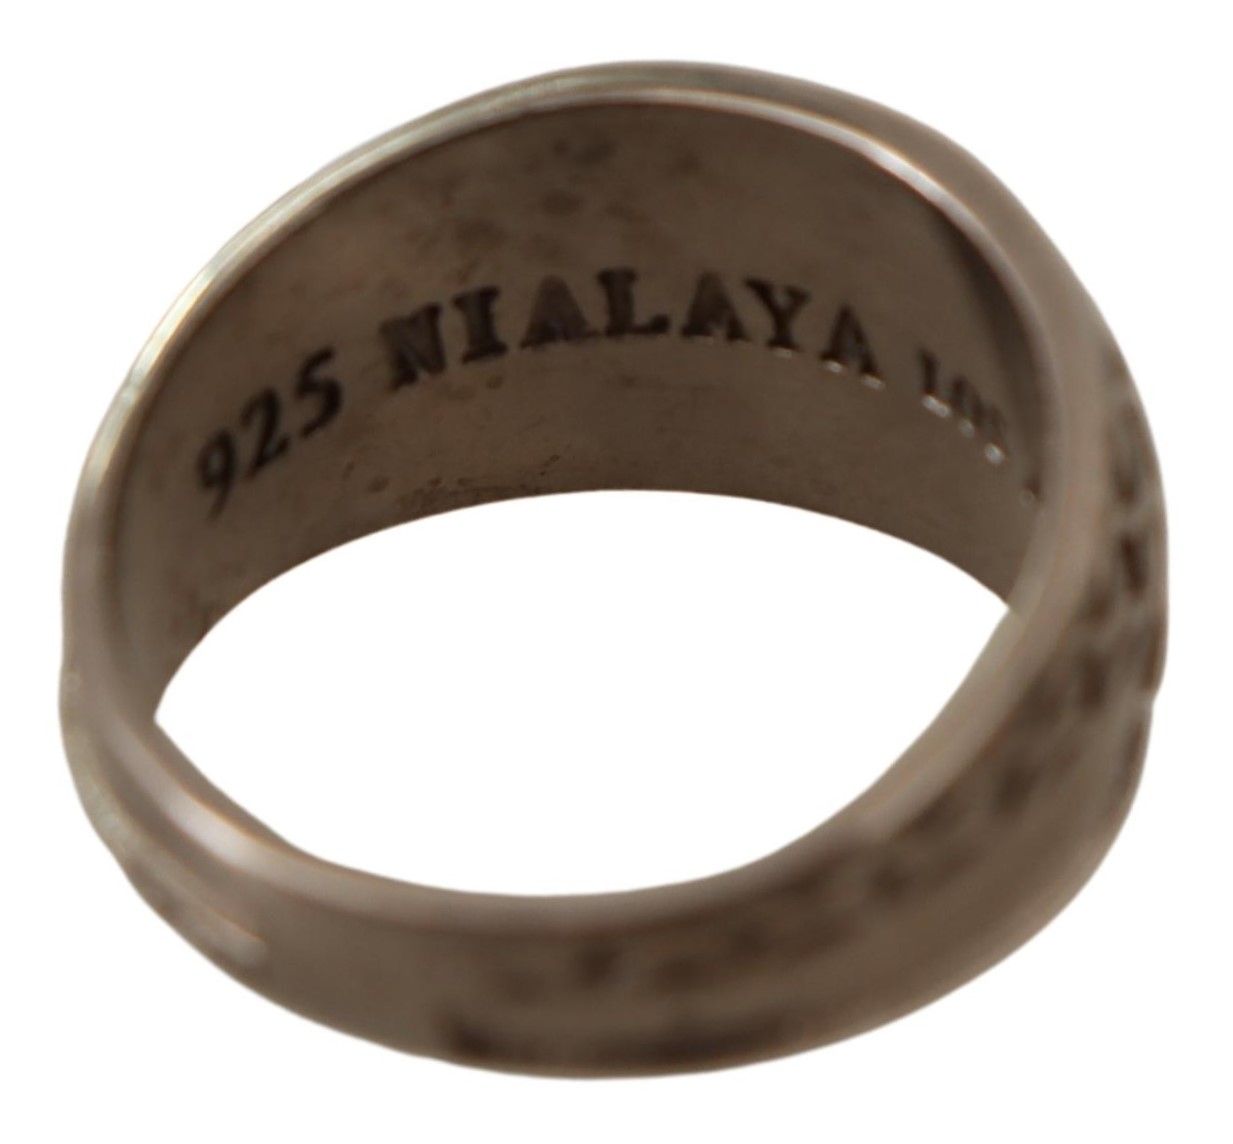 Nialaya Exquisite Silver Mens Statement Ring